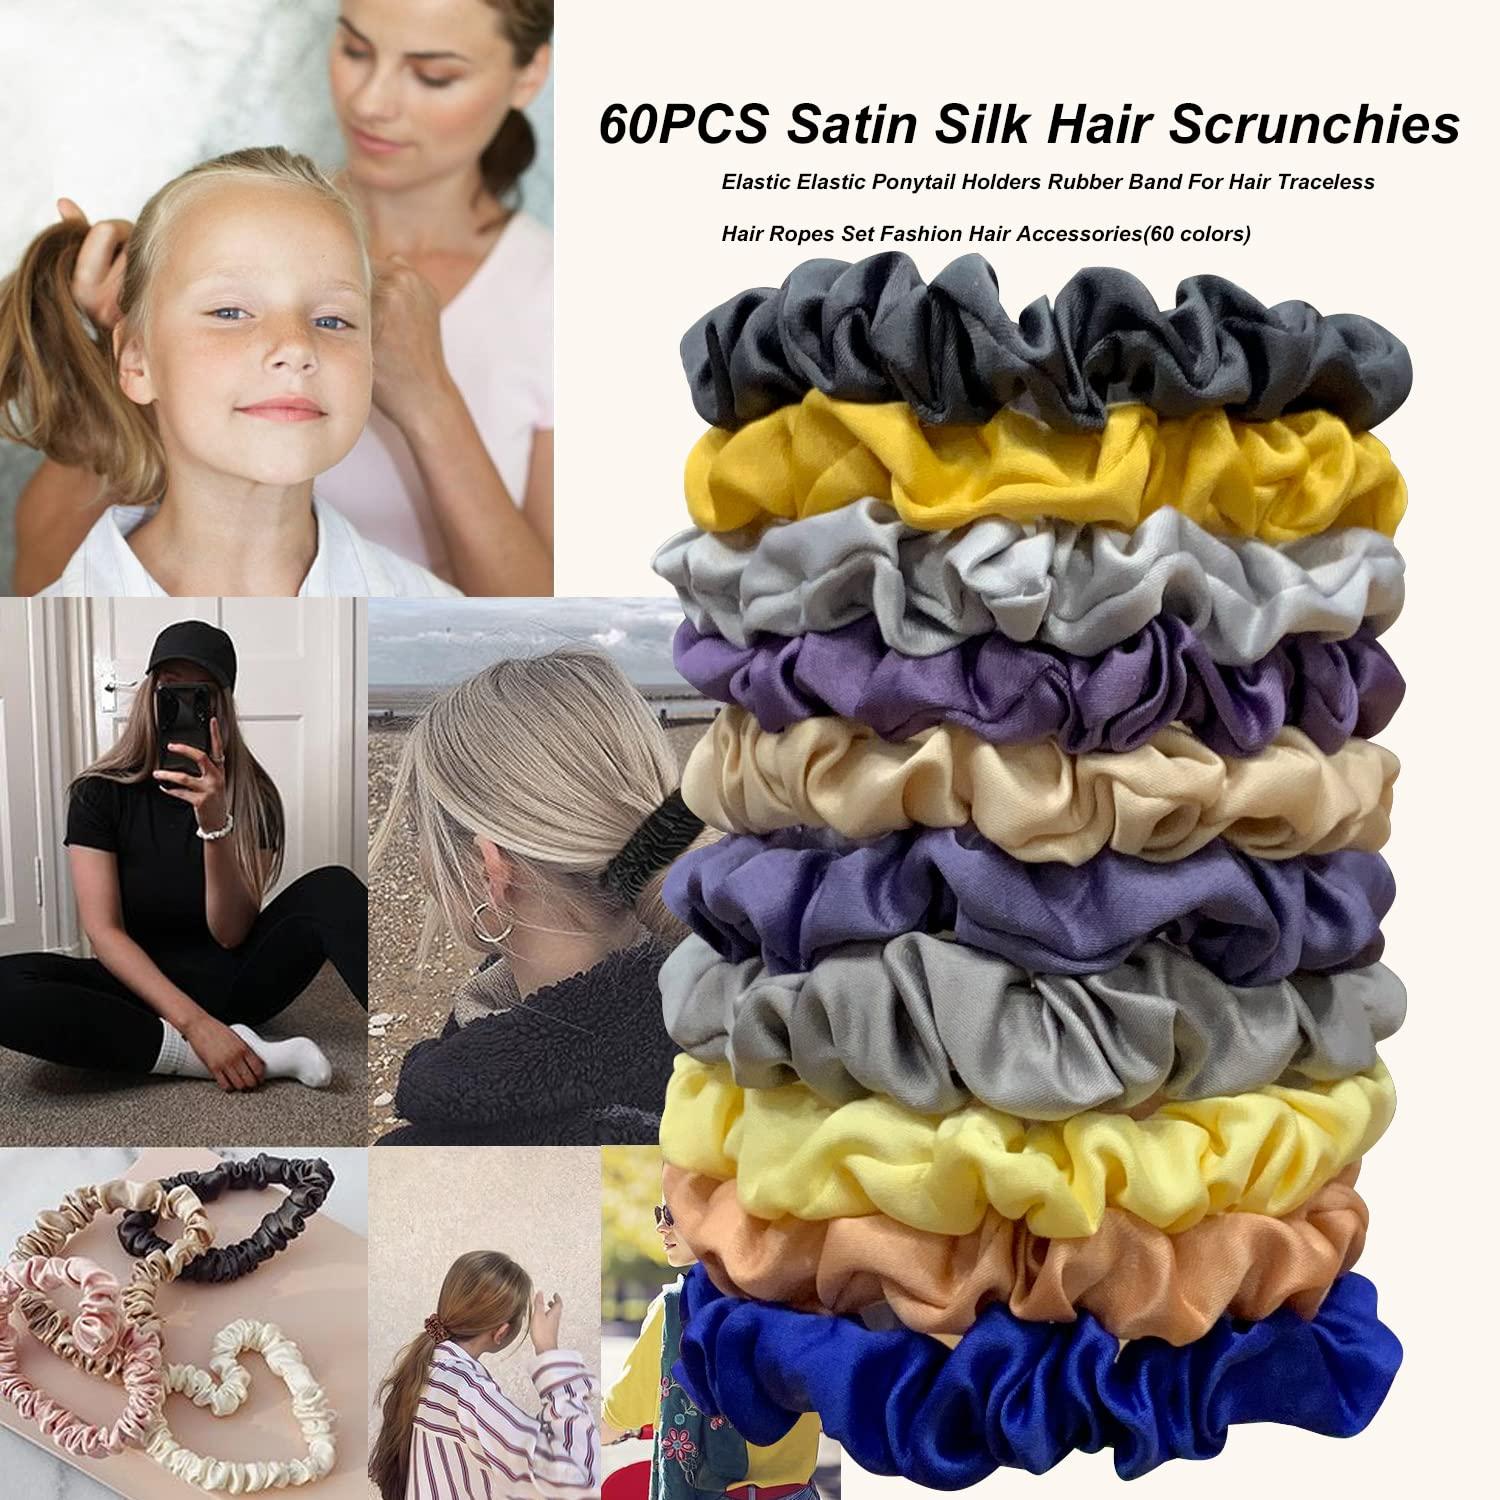 YANRONG 60PCS Satin Silk Hair Scrunchies Elastic Elastic Ponytail Holders  Rubber Band For Hair Traceless Hair Ropes Set Fashion Hair Accessories  Softer than Silk(60 Colors) 60PCS (60 Colors)